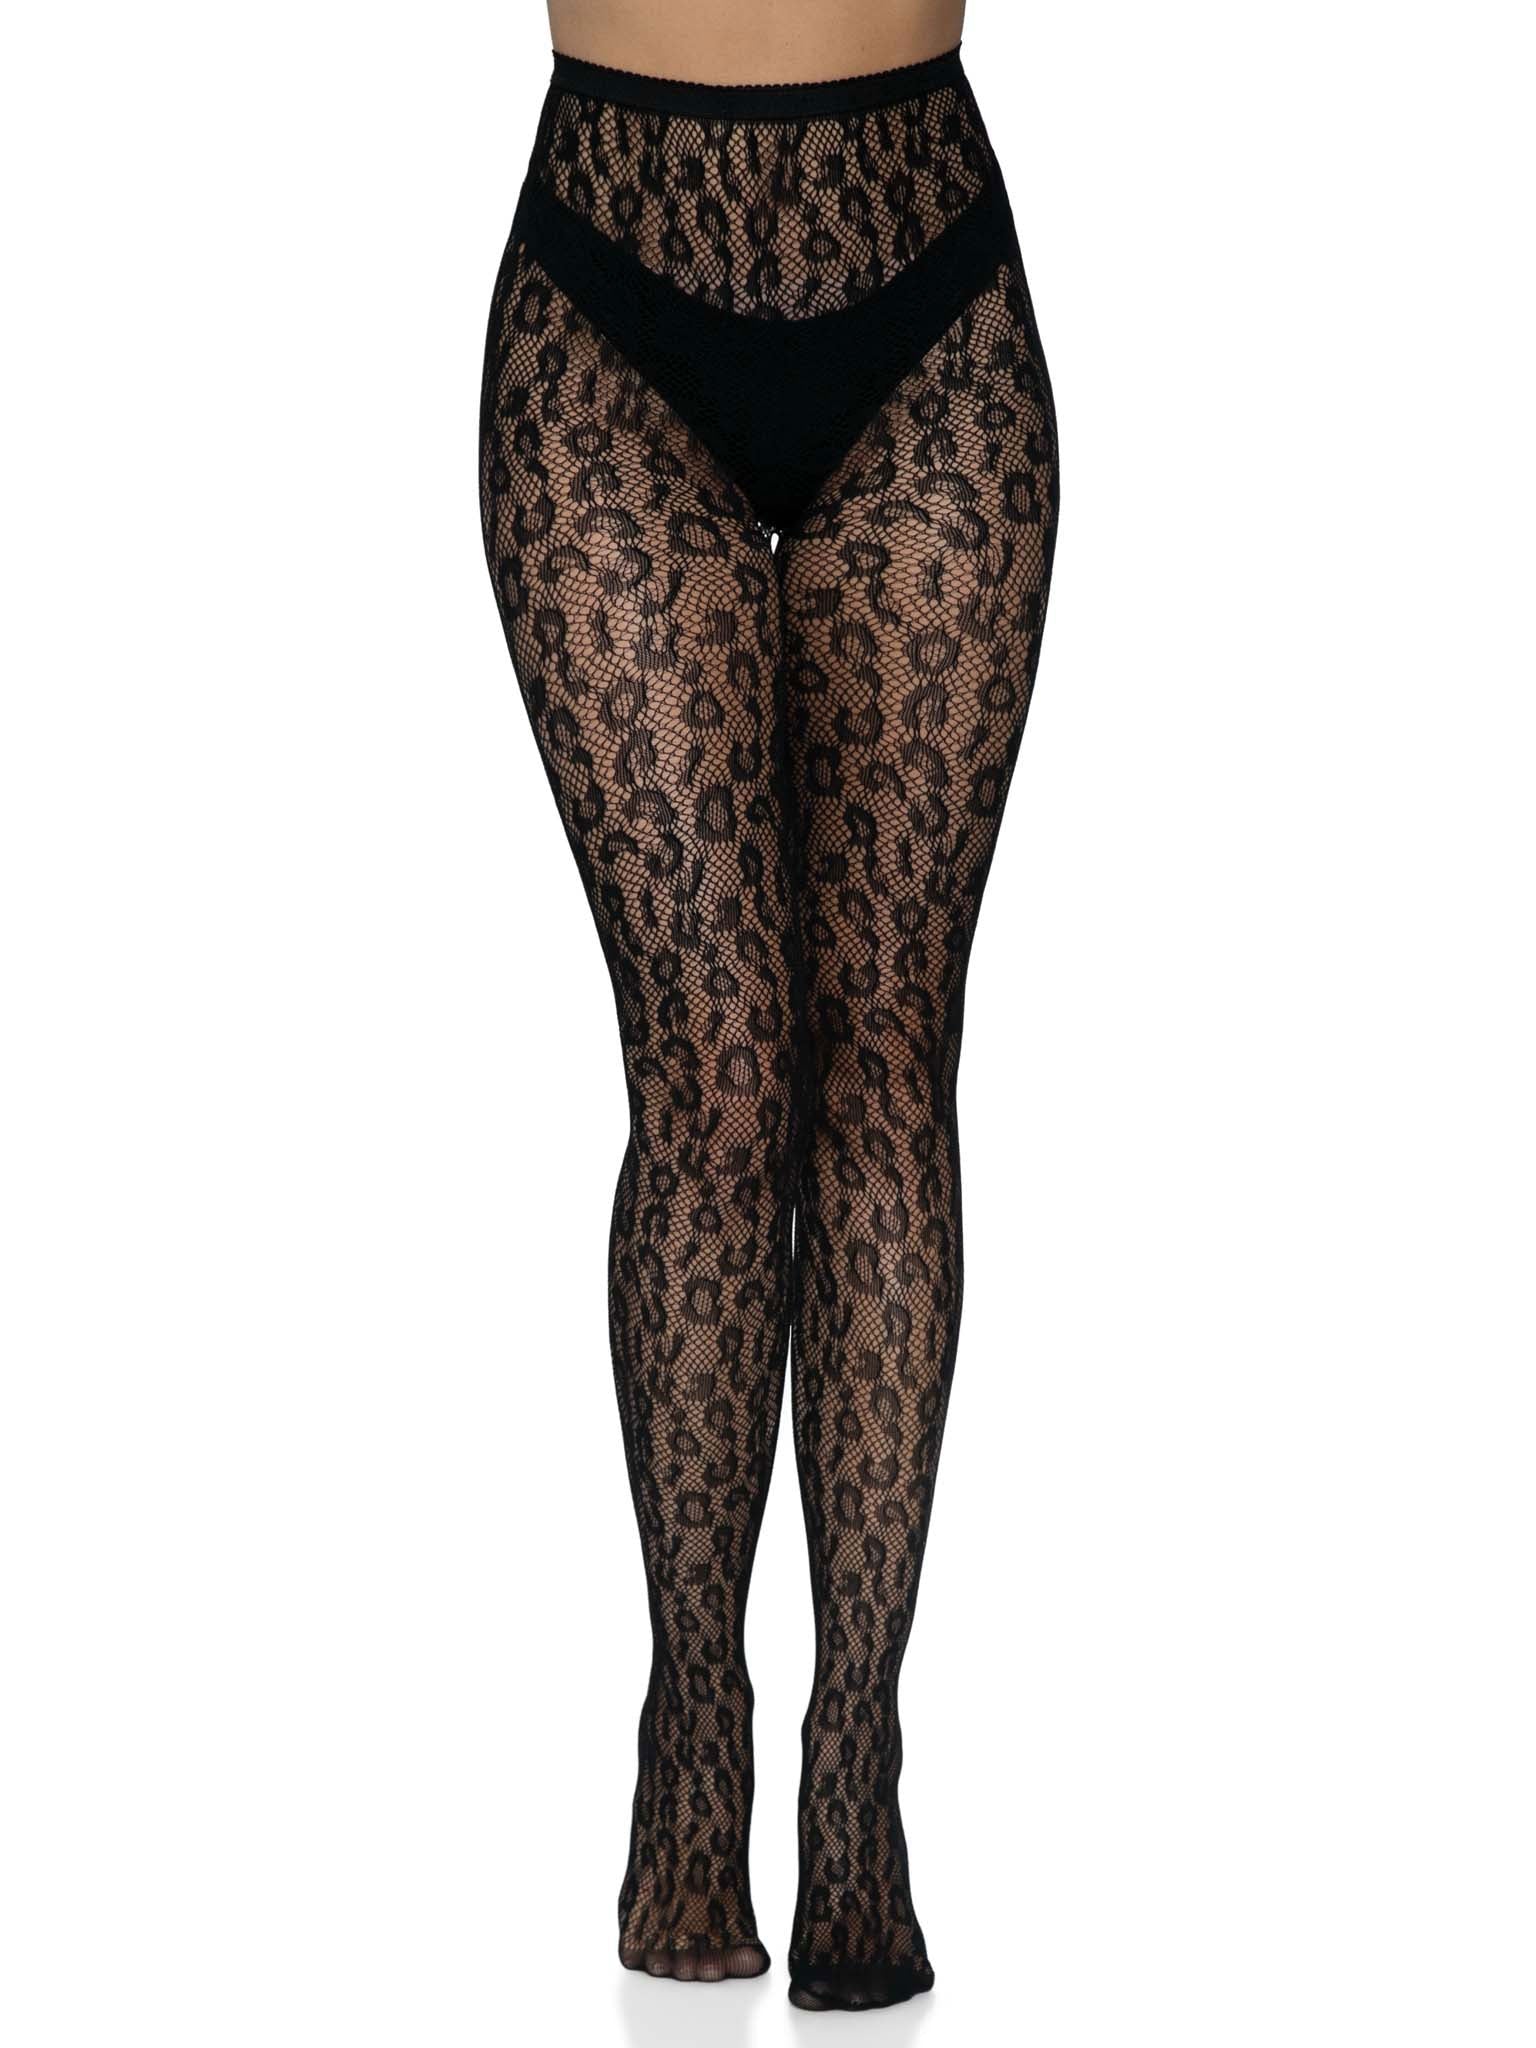 Leopard Net Tights - One Size - Black